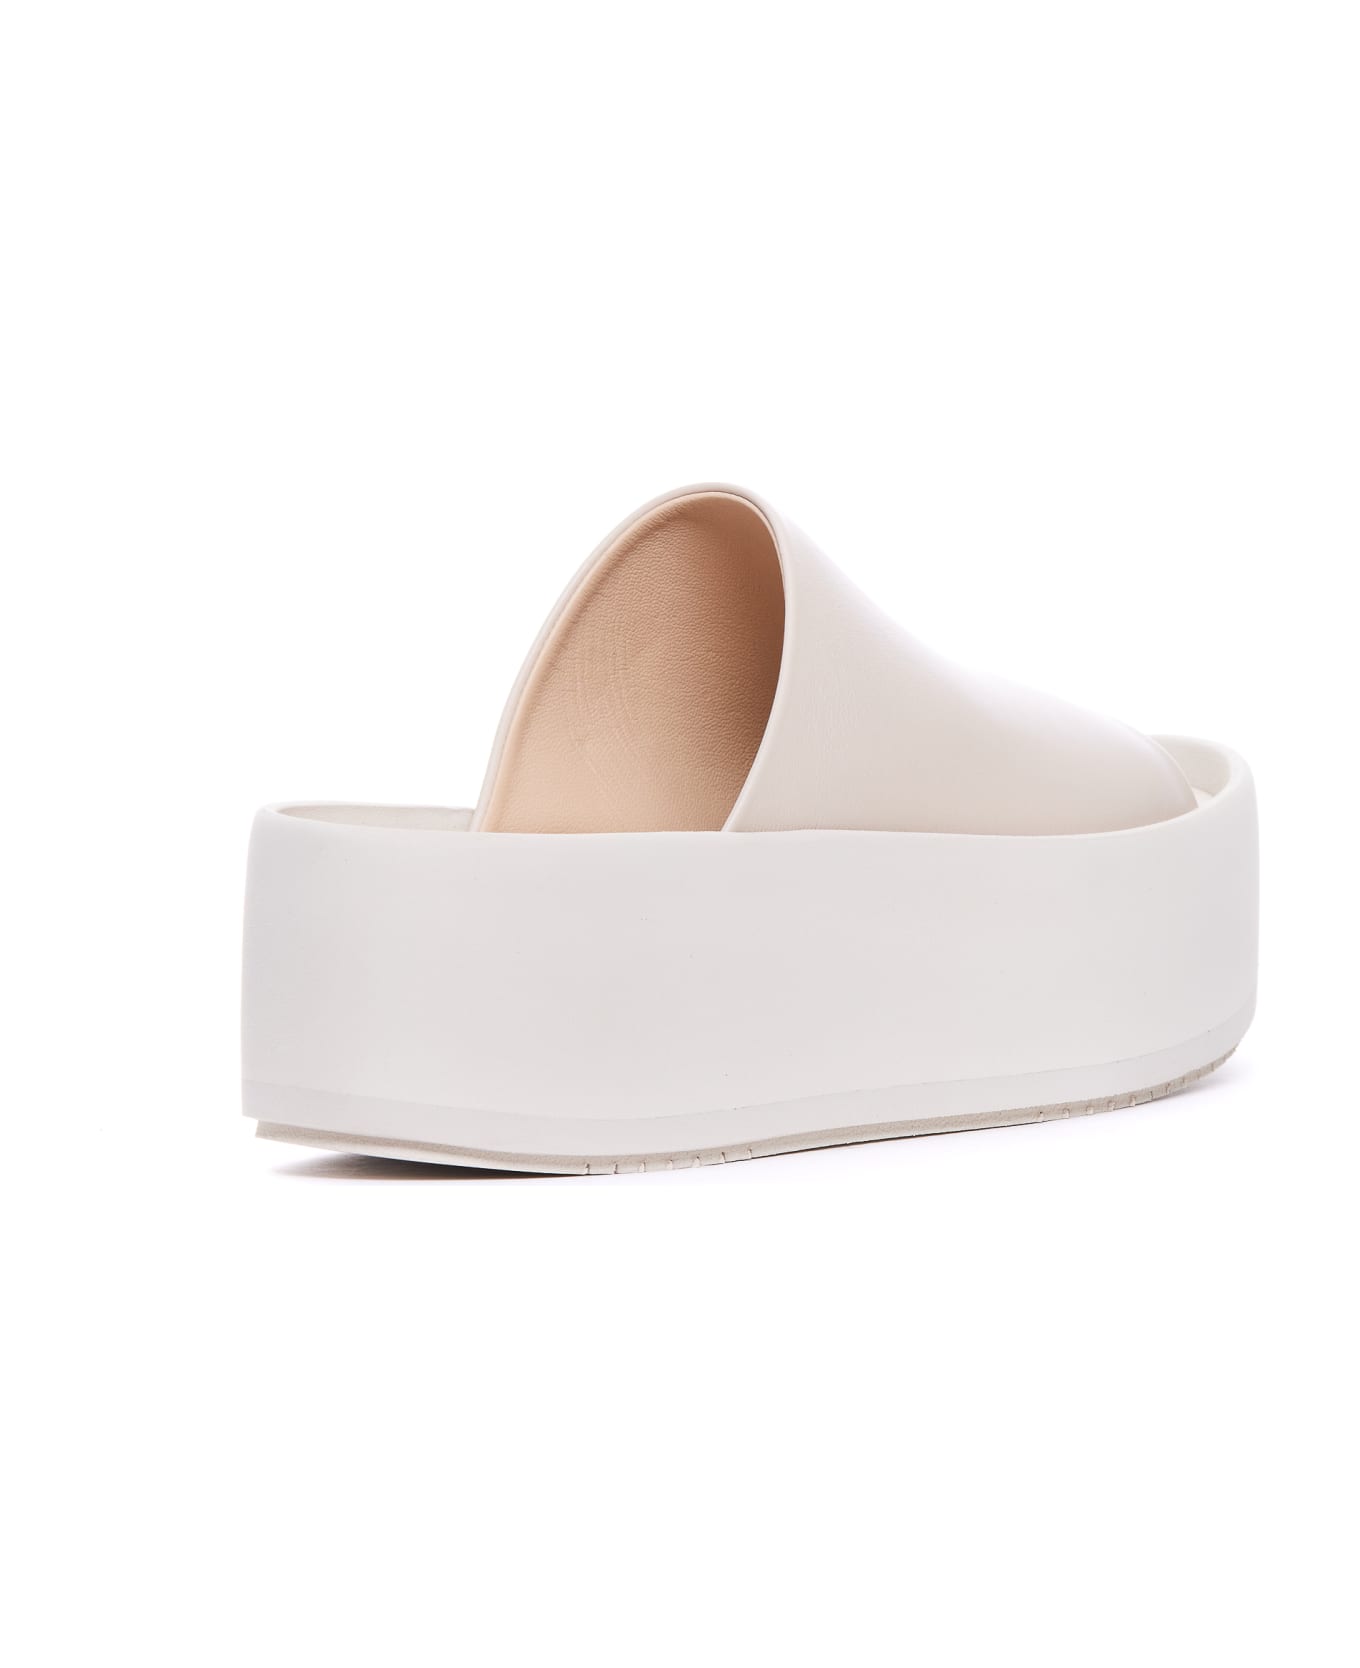 Paloma Barceló Minsi Platform Sandals - White